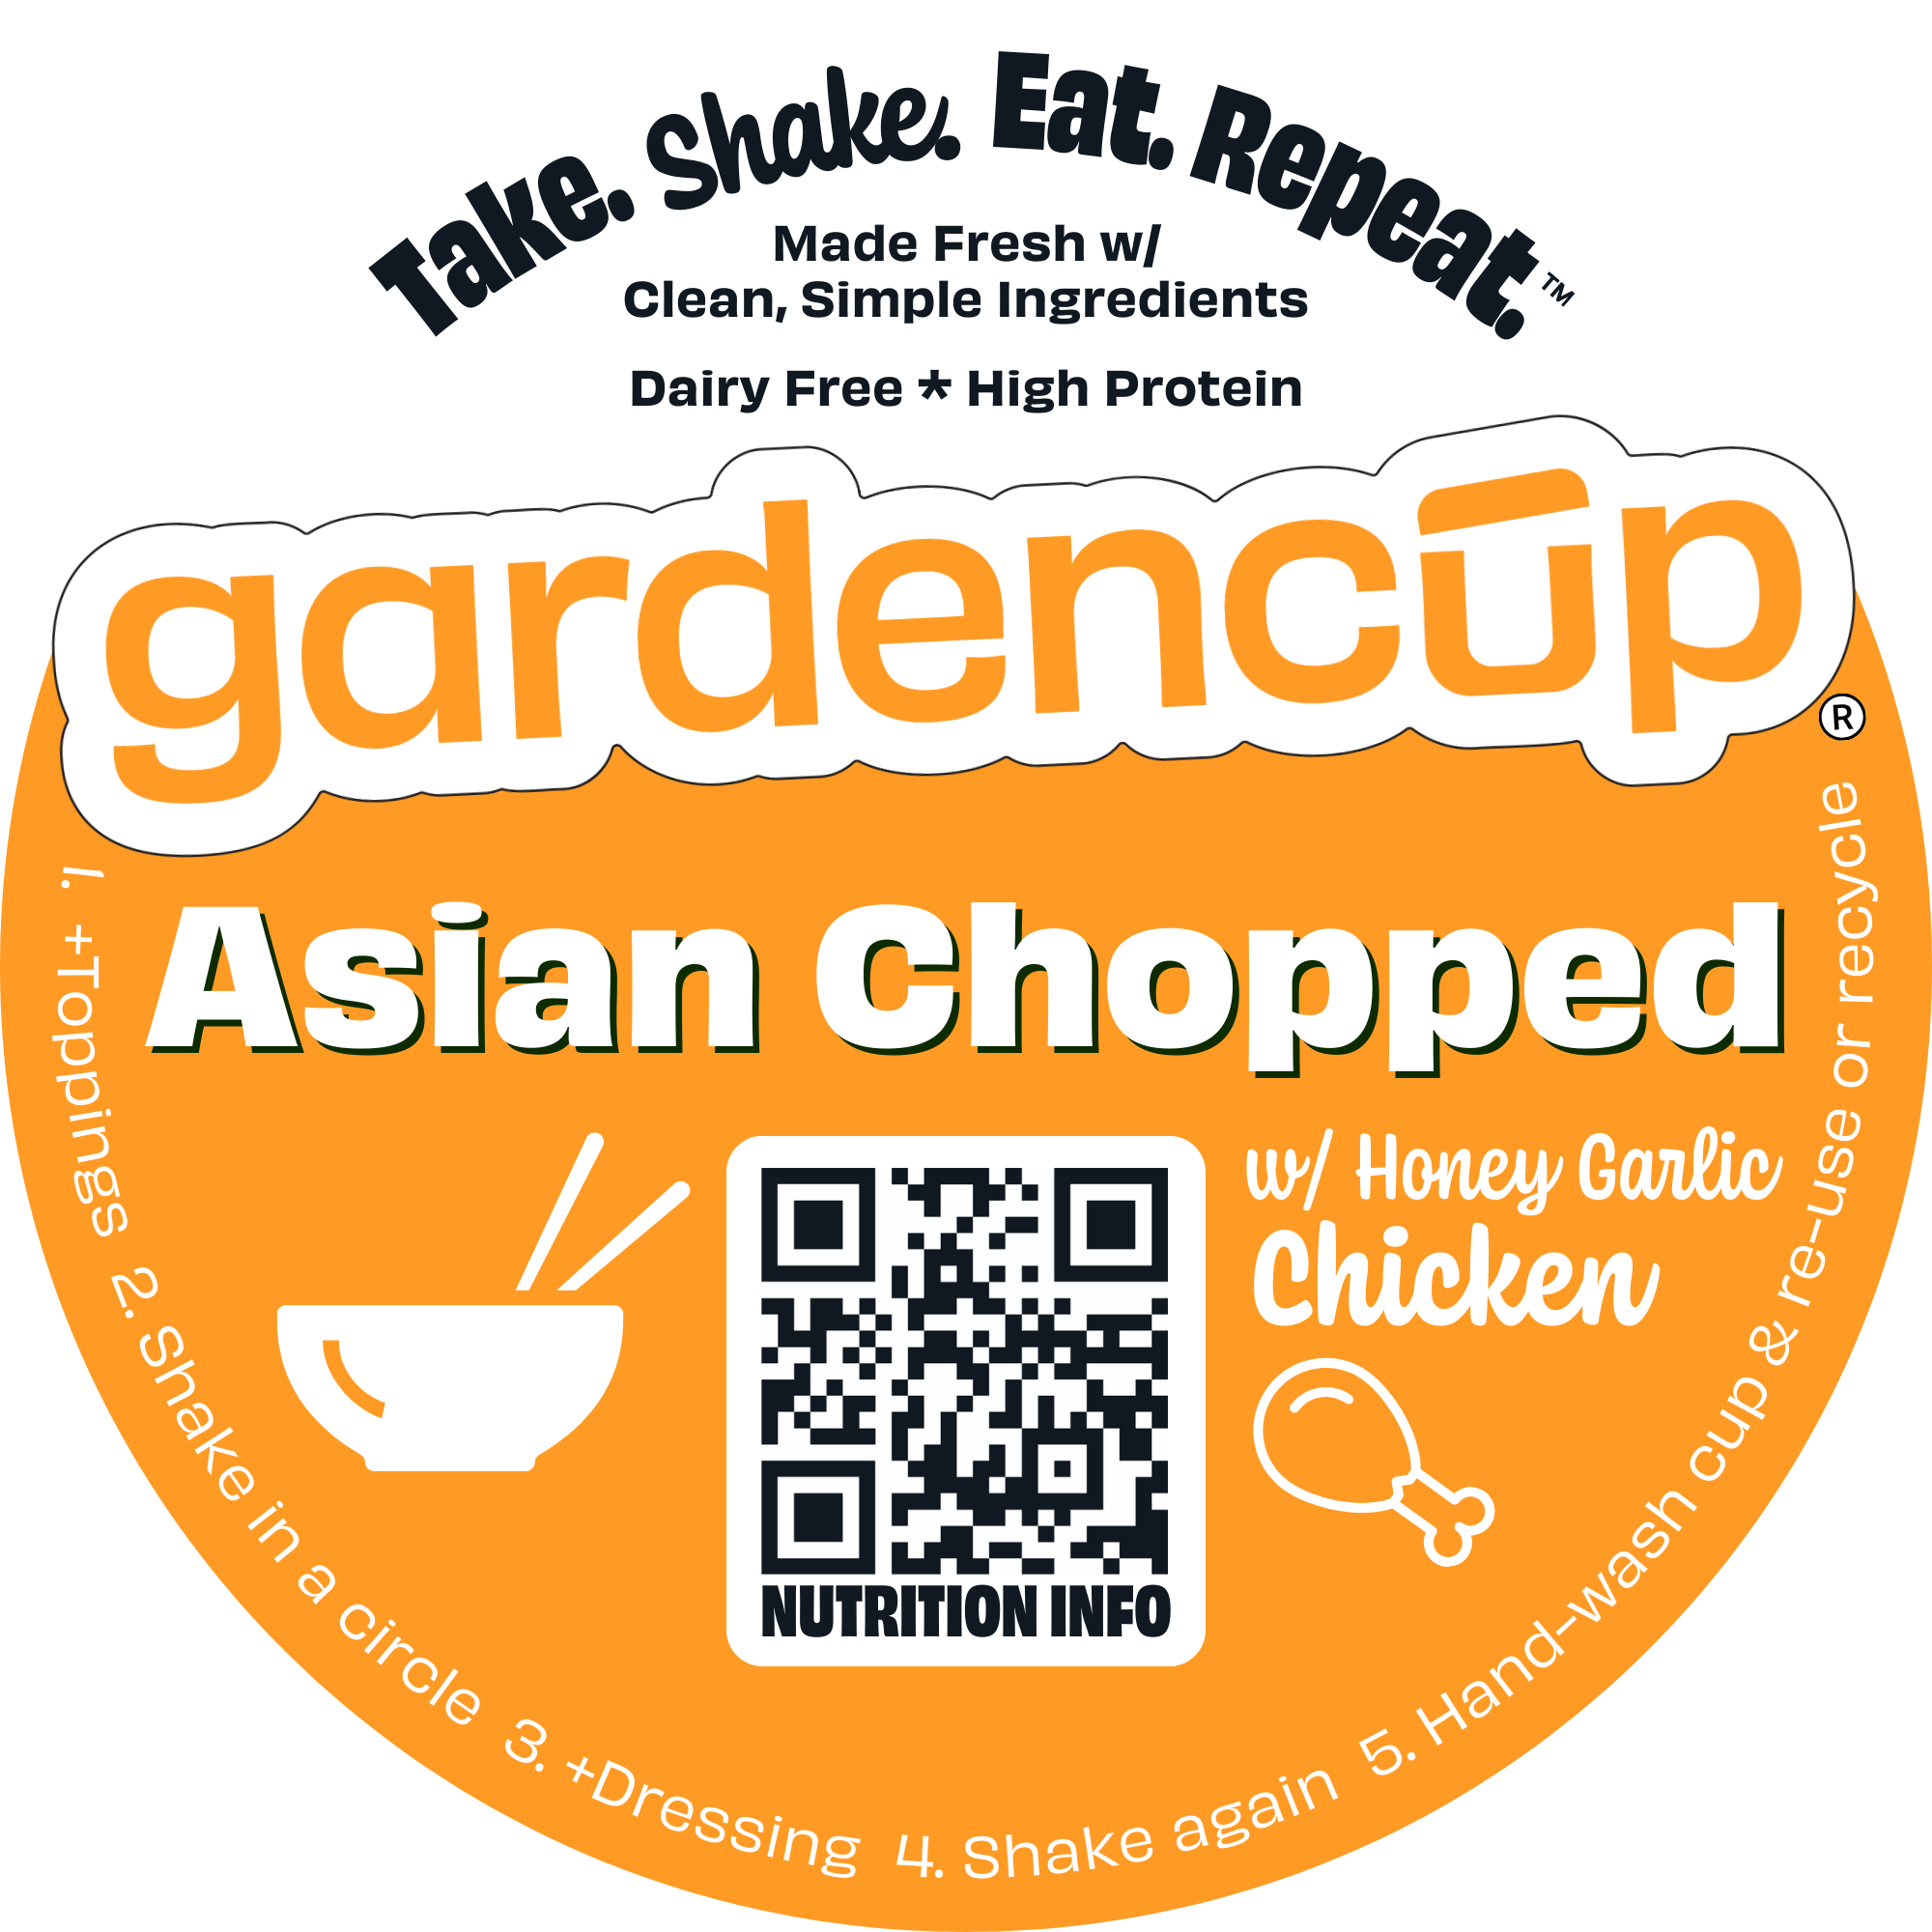 Asian Chopped w/Honey Garlic Chicken